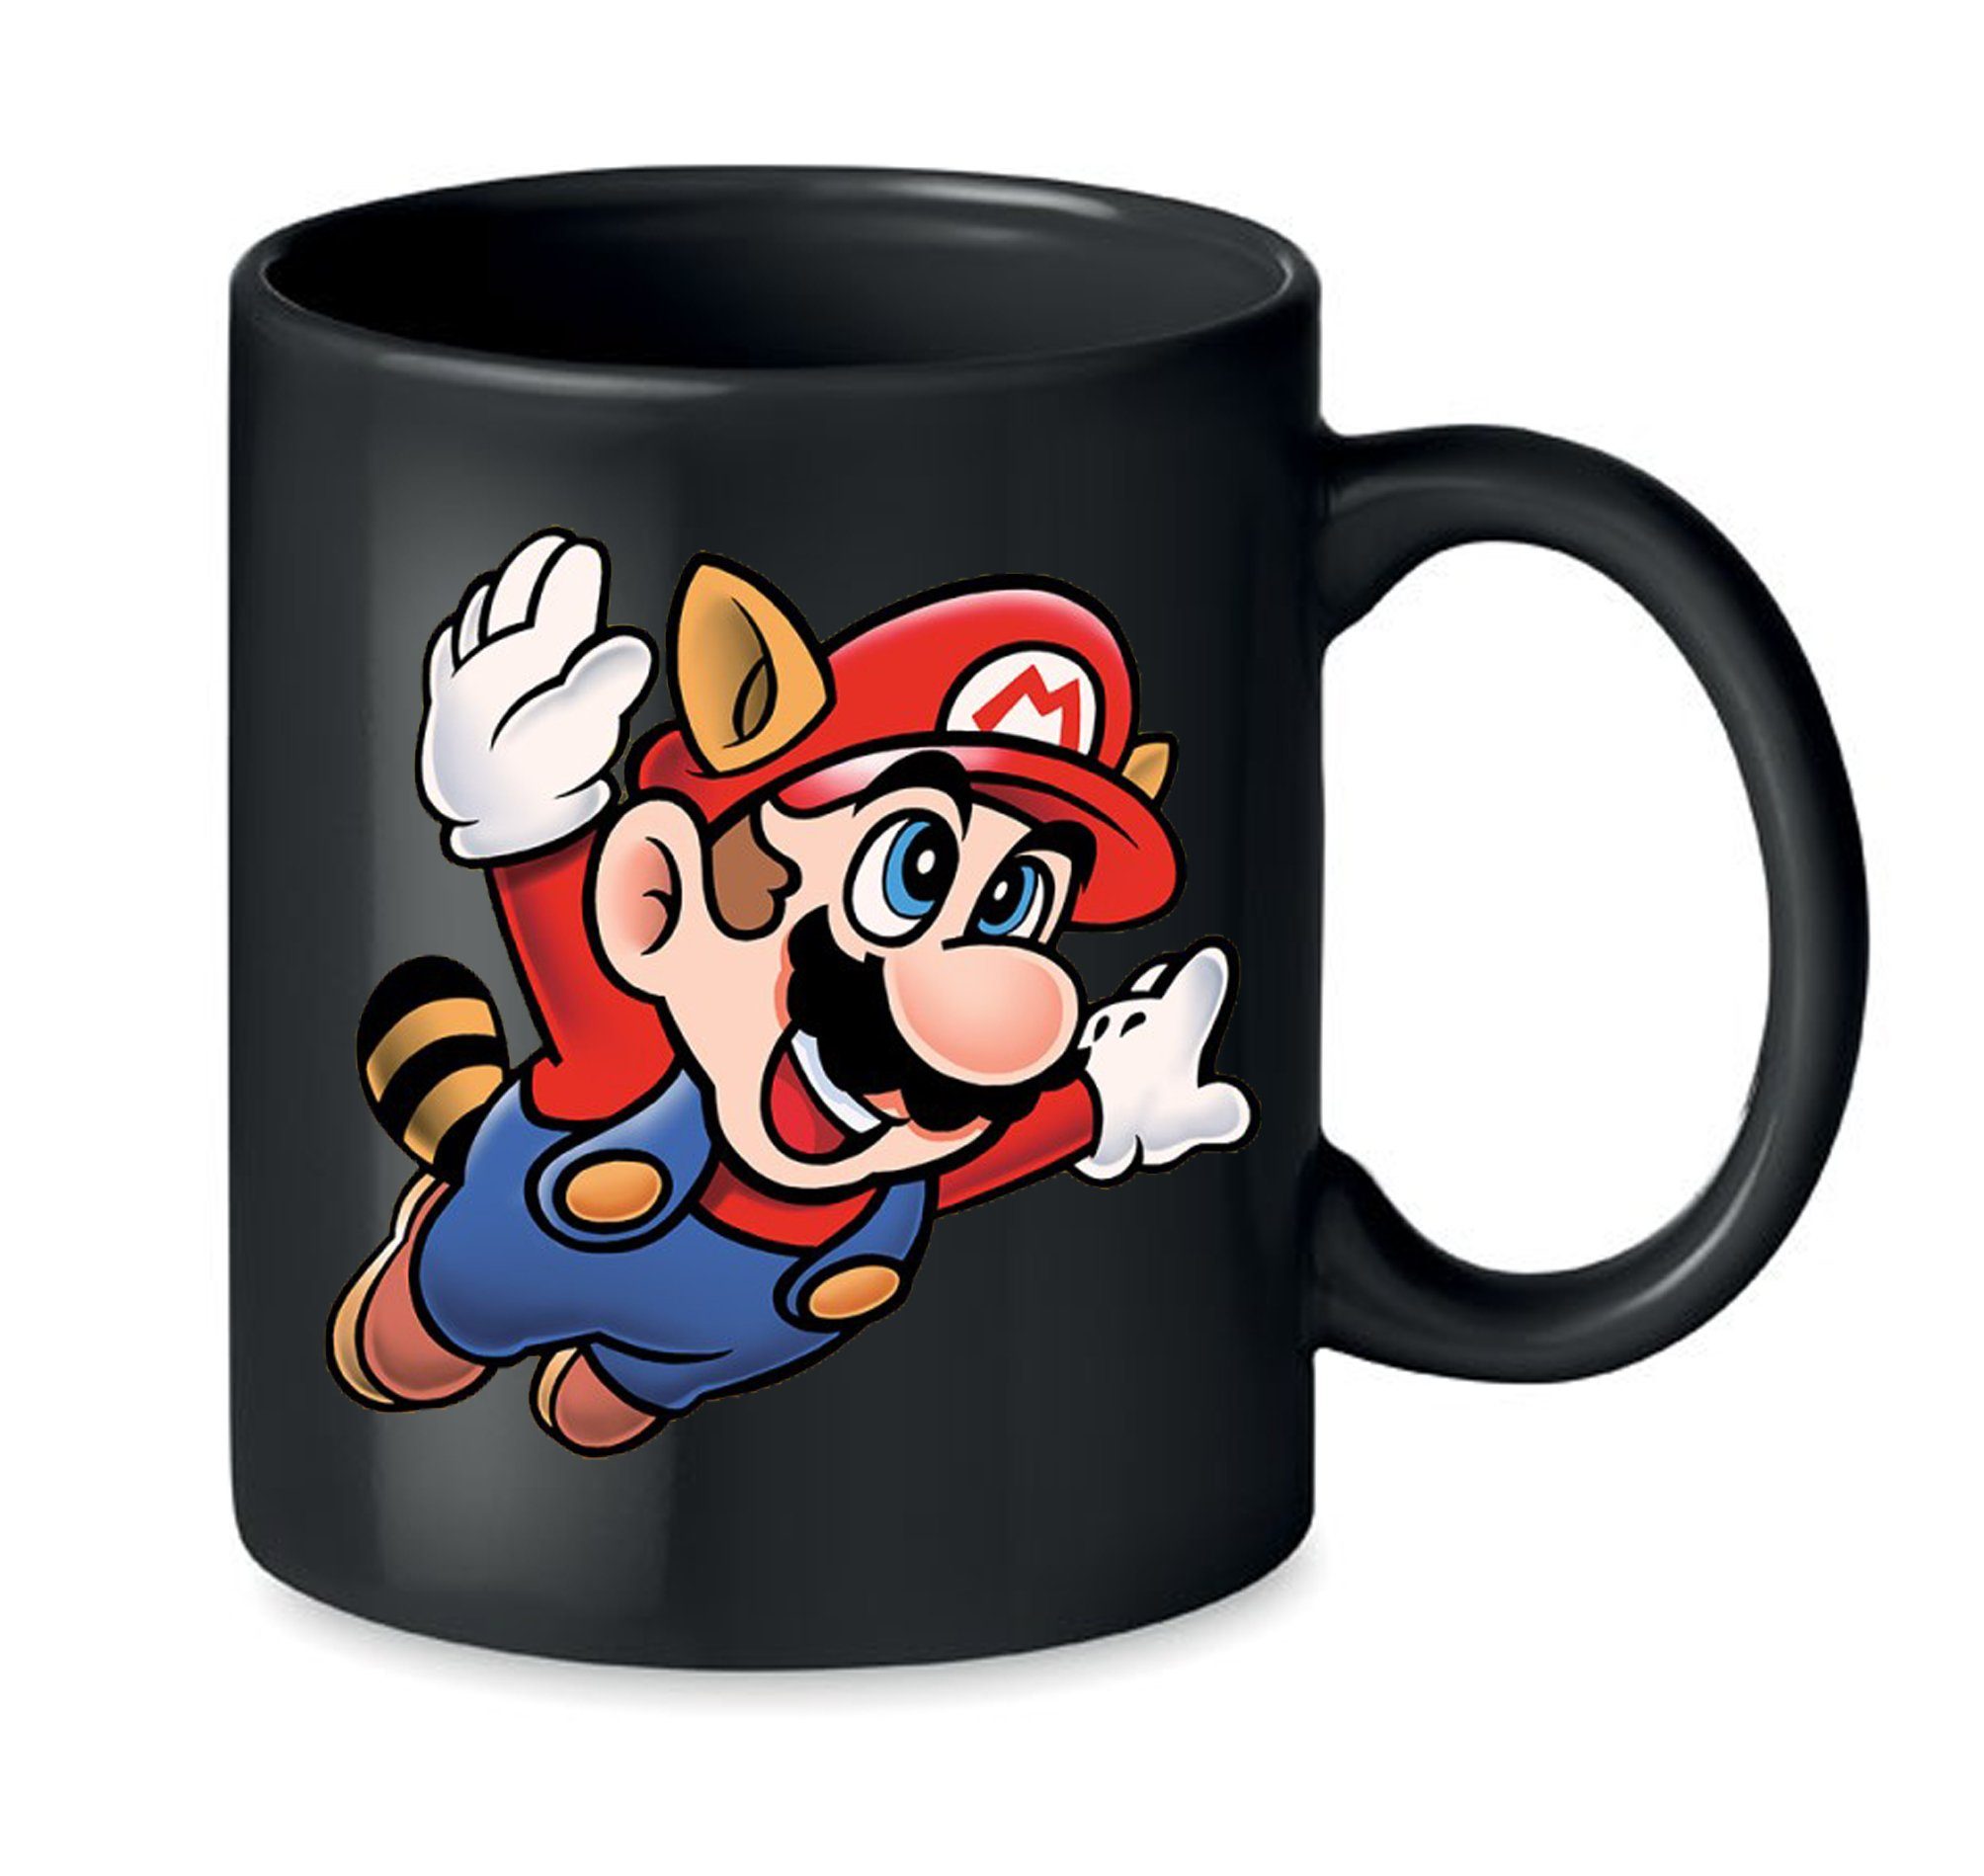 Blondie & Brownie Tasse Super Mario 3 Fligh Nintendo Gamer Gaming Nerd Konsole, Keramik Schwarz